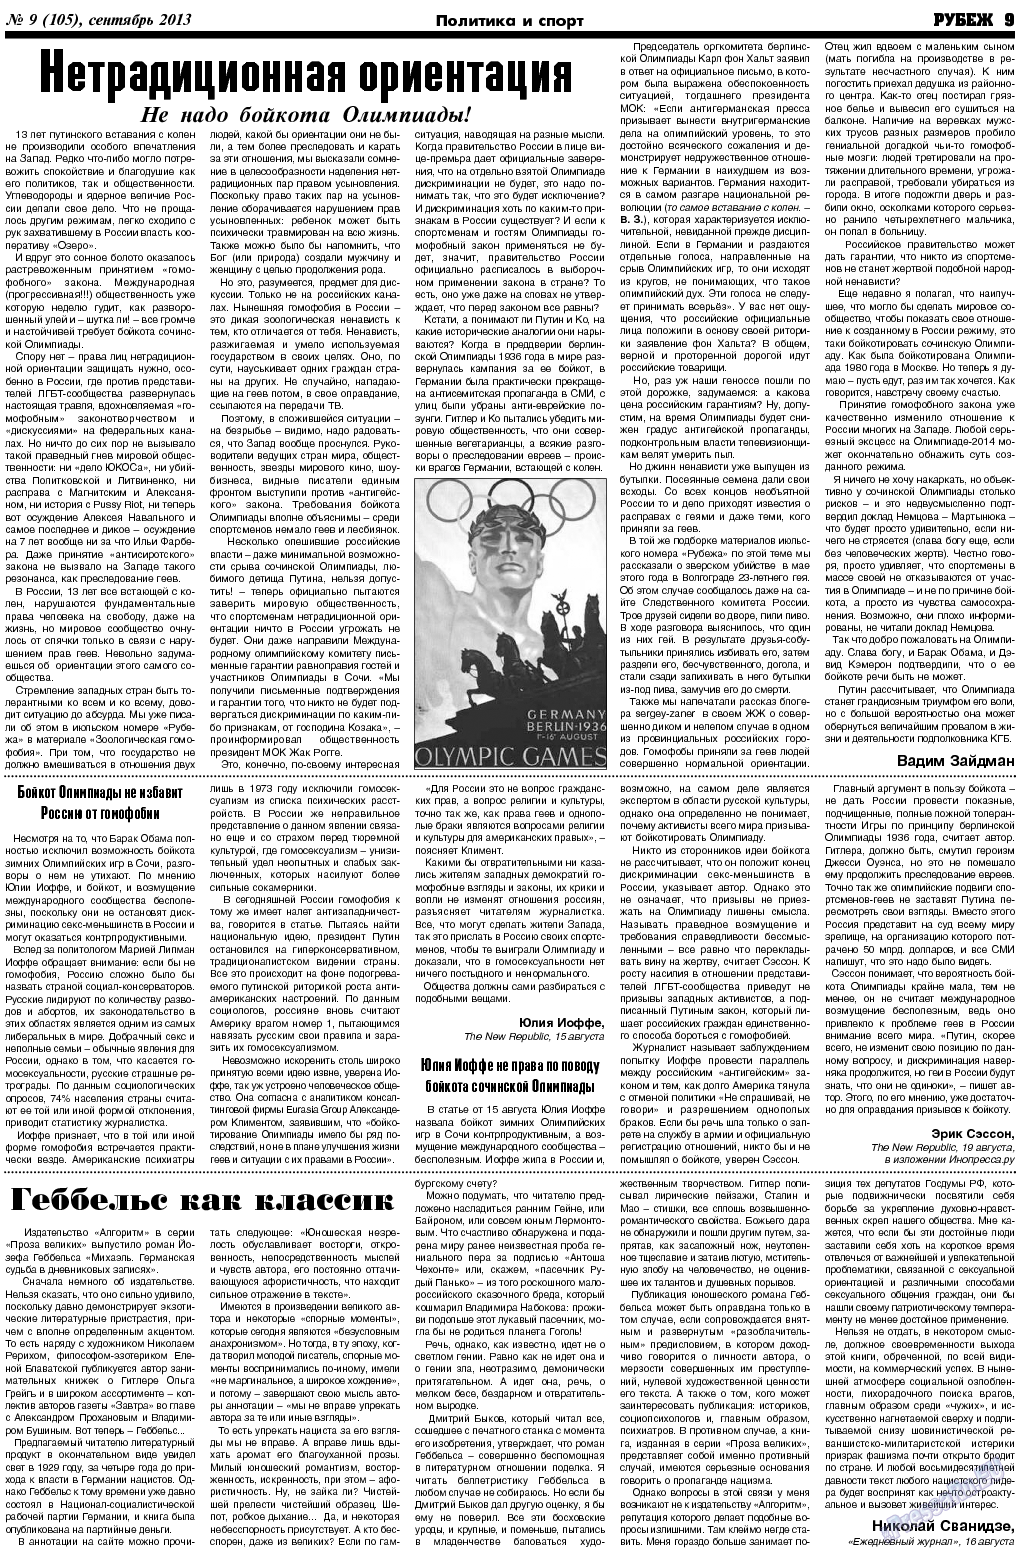 Рубеж, газета. 2013 №9 стр.9